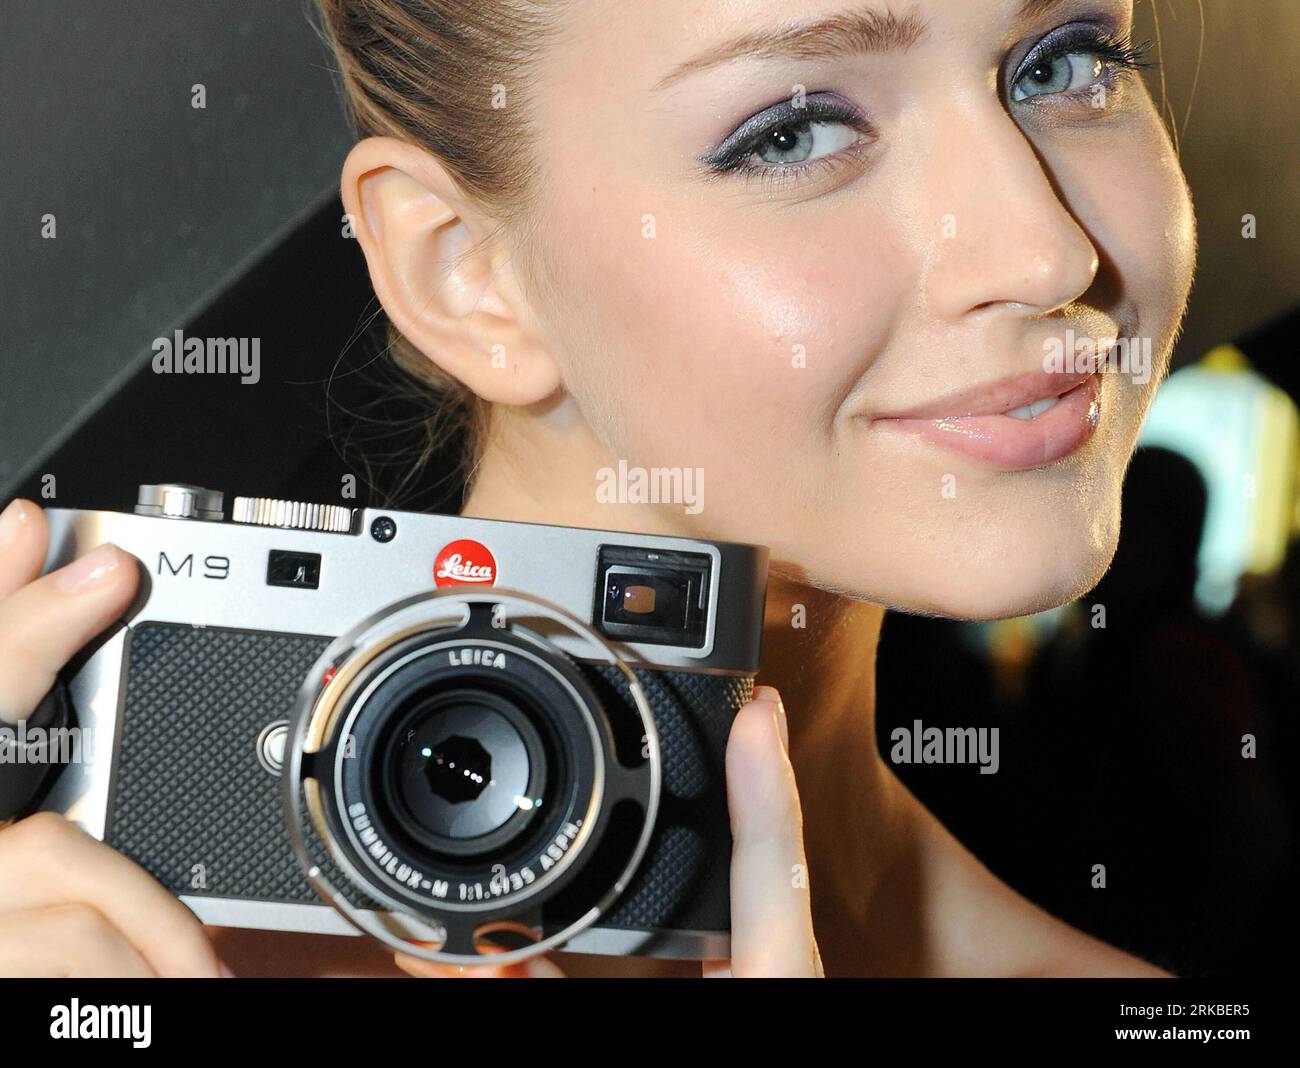 Leica D-LUX 3 camera Stock Photo - Alamy